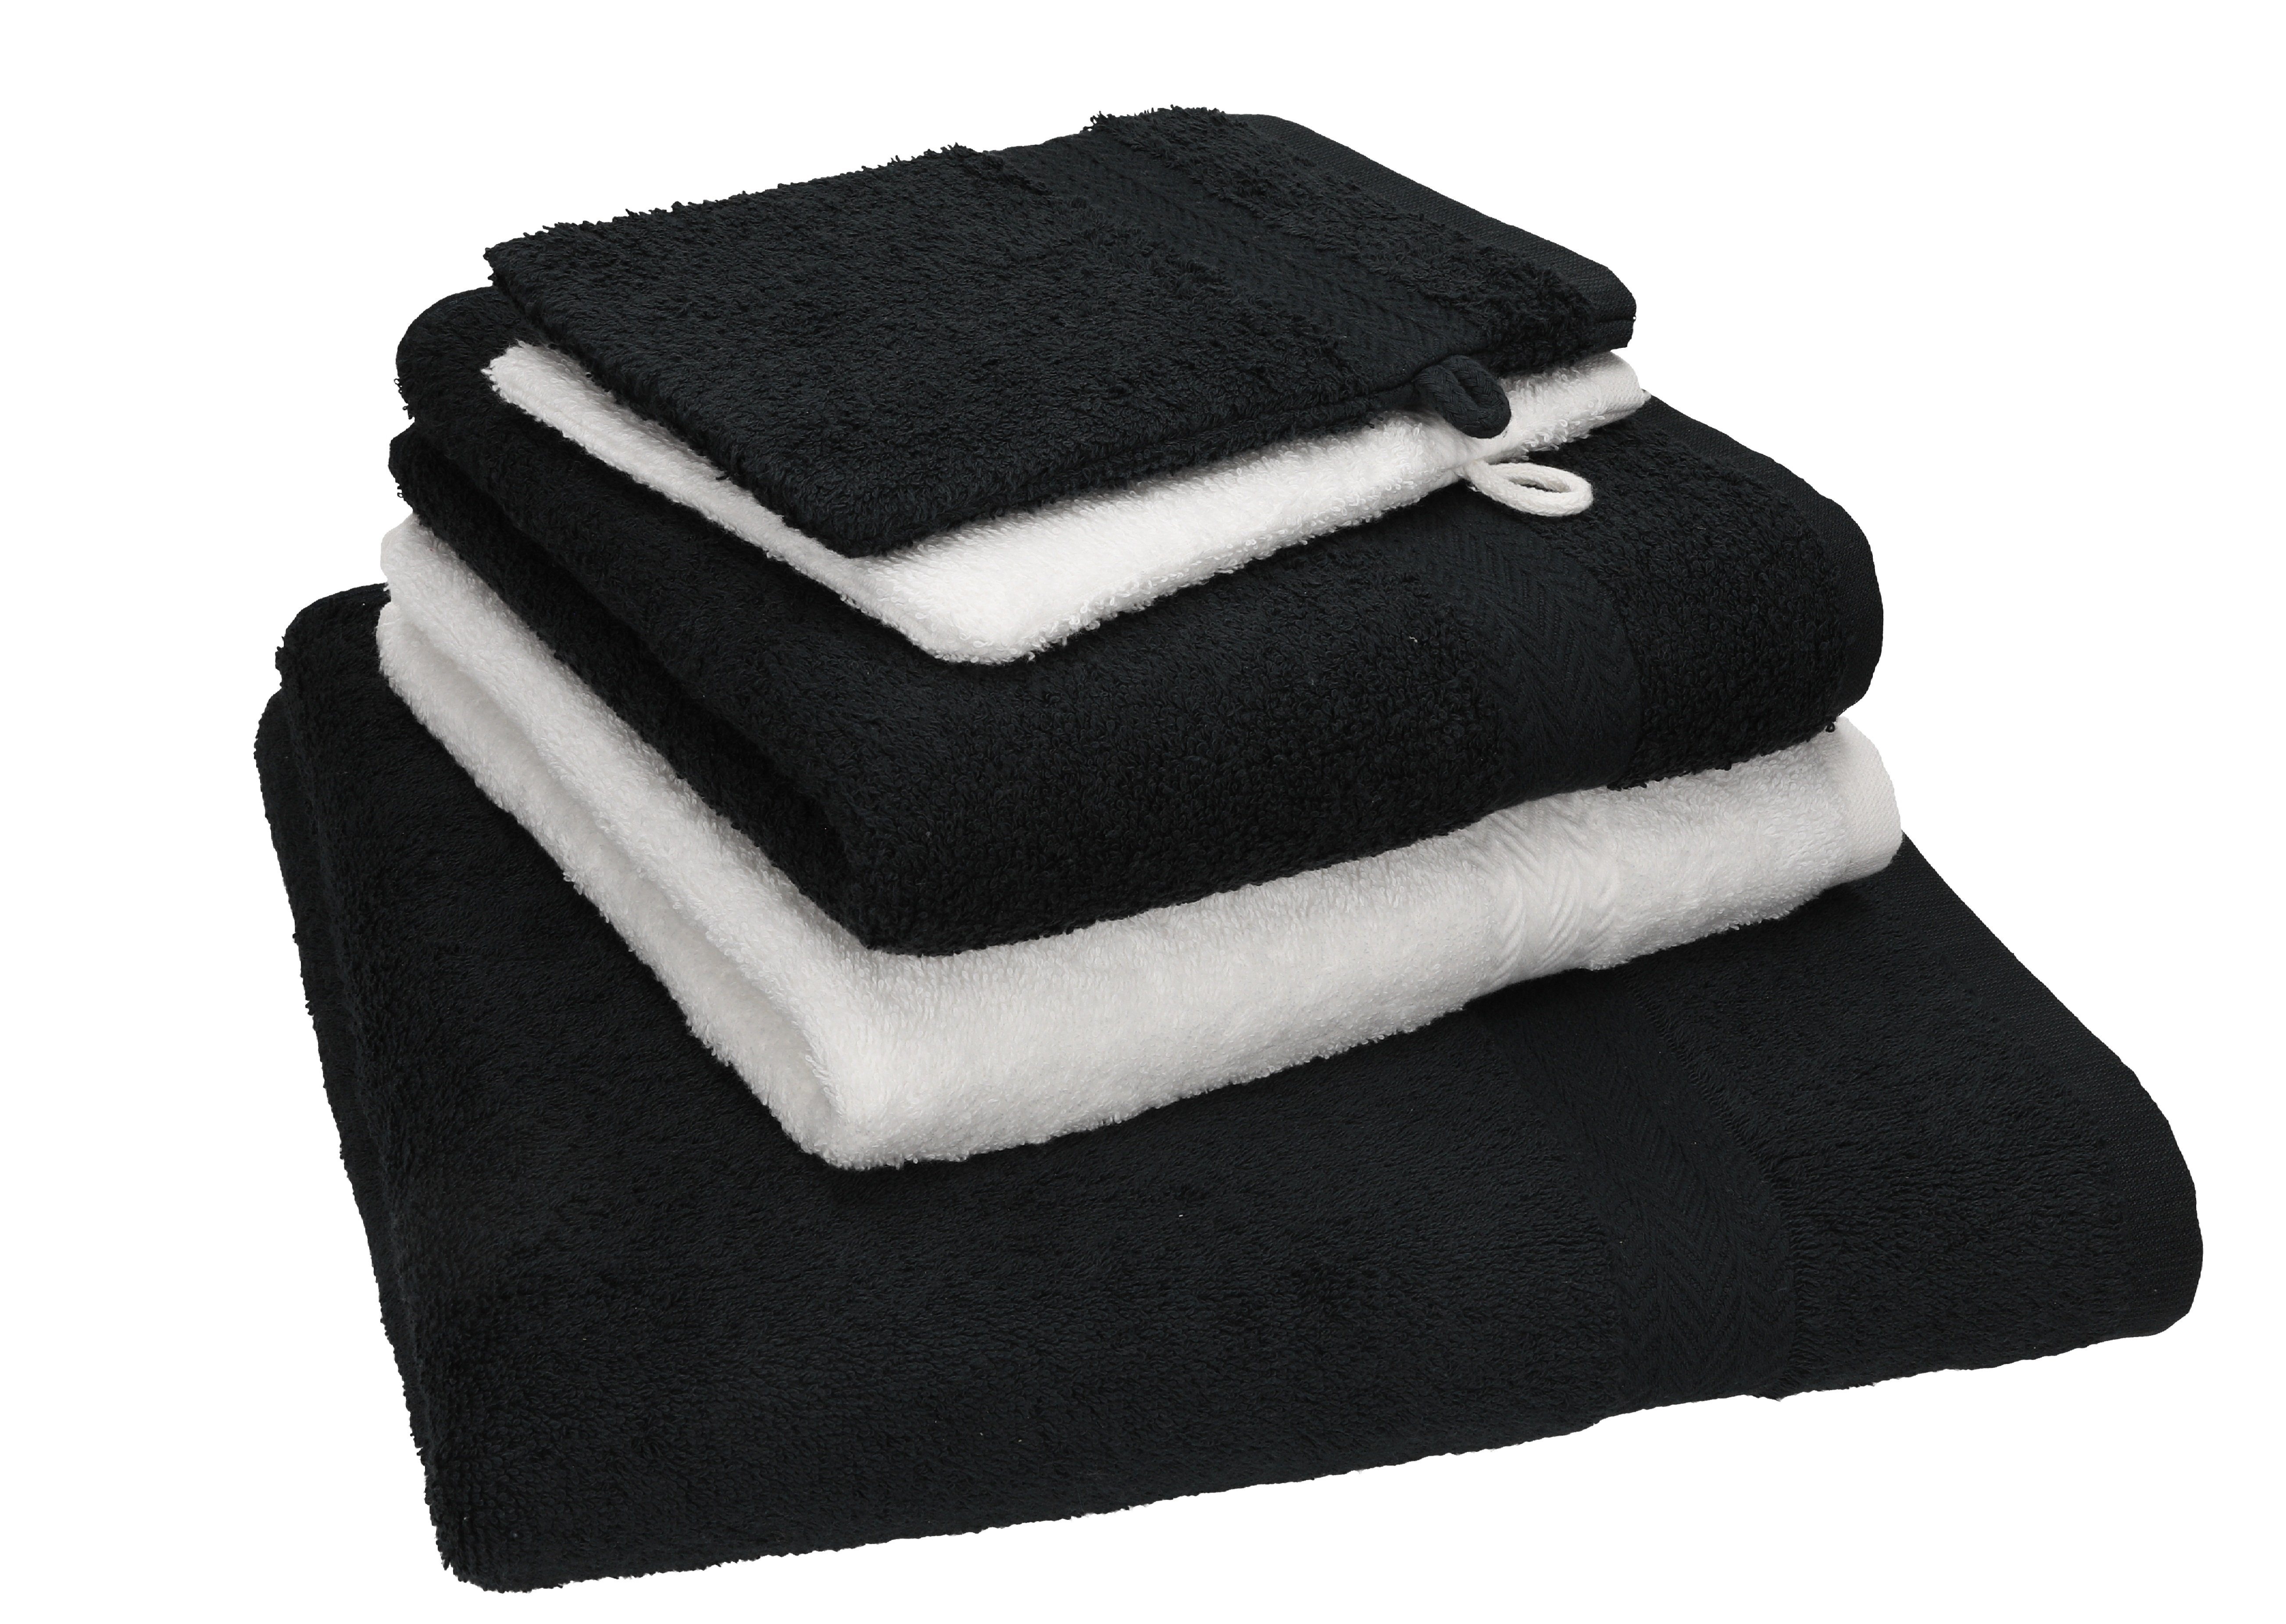 Betz Handtuch Set 5 Duschtuch Pack 100% 2 TLG. Baumwolle 100% 2 Handtuch Single Baumwolle Waschhandschuhe, 1 Set schwarz-weiß Handtücher